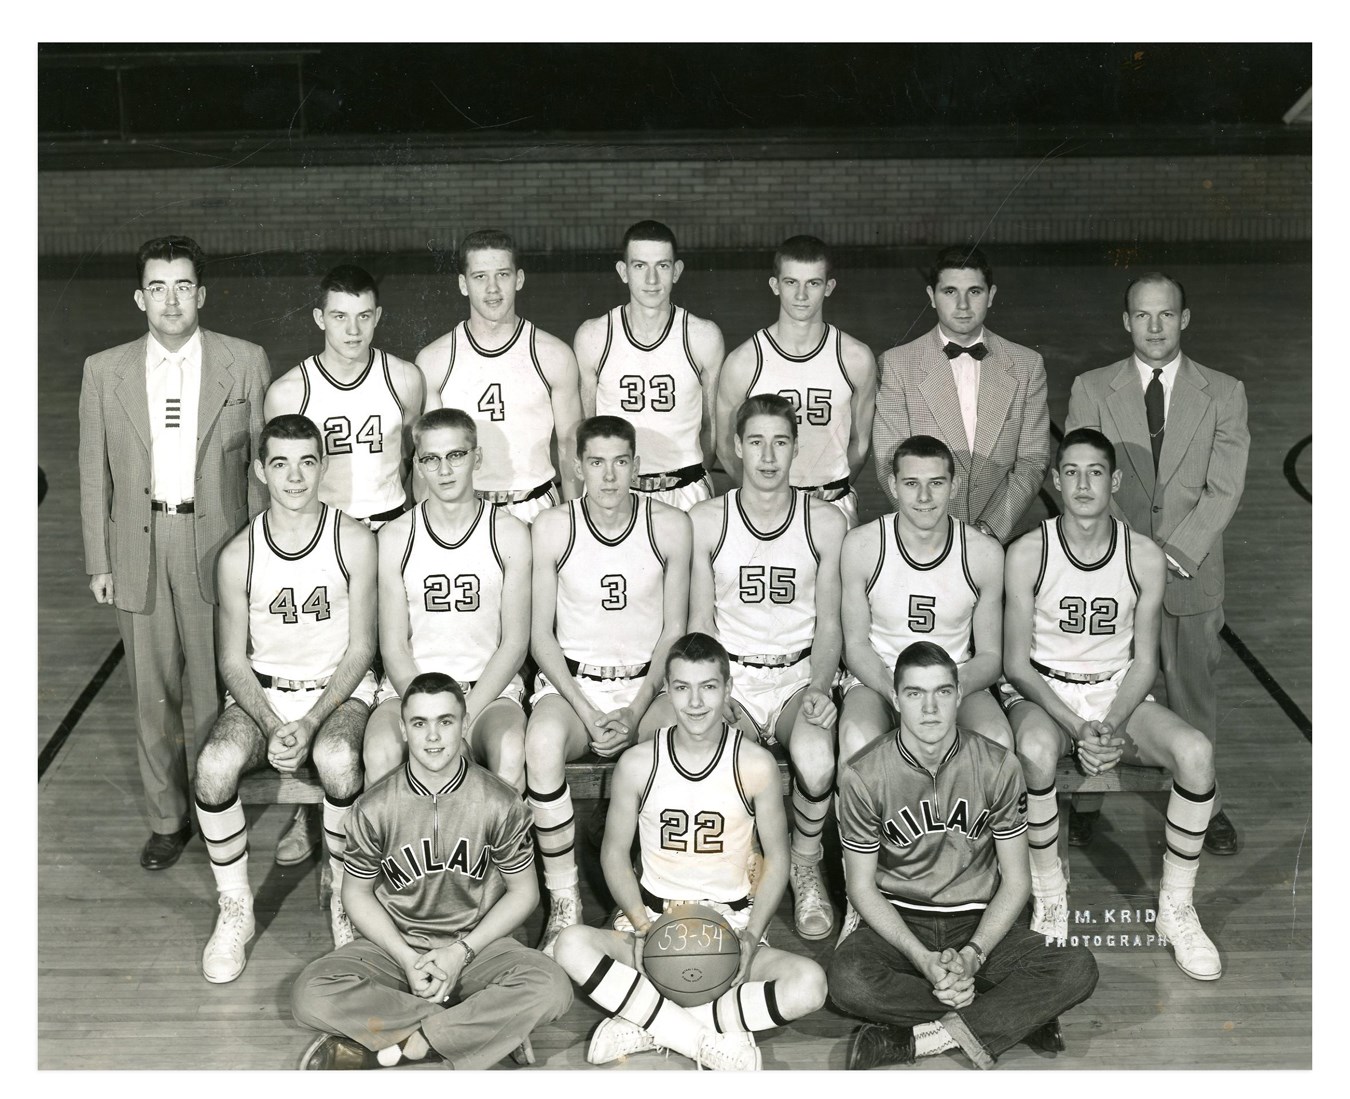 Basketball - 1954 Milan Basketball Team Photos and Program (4)